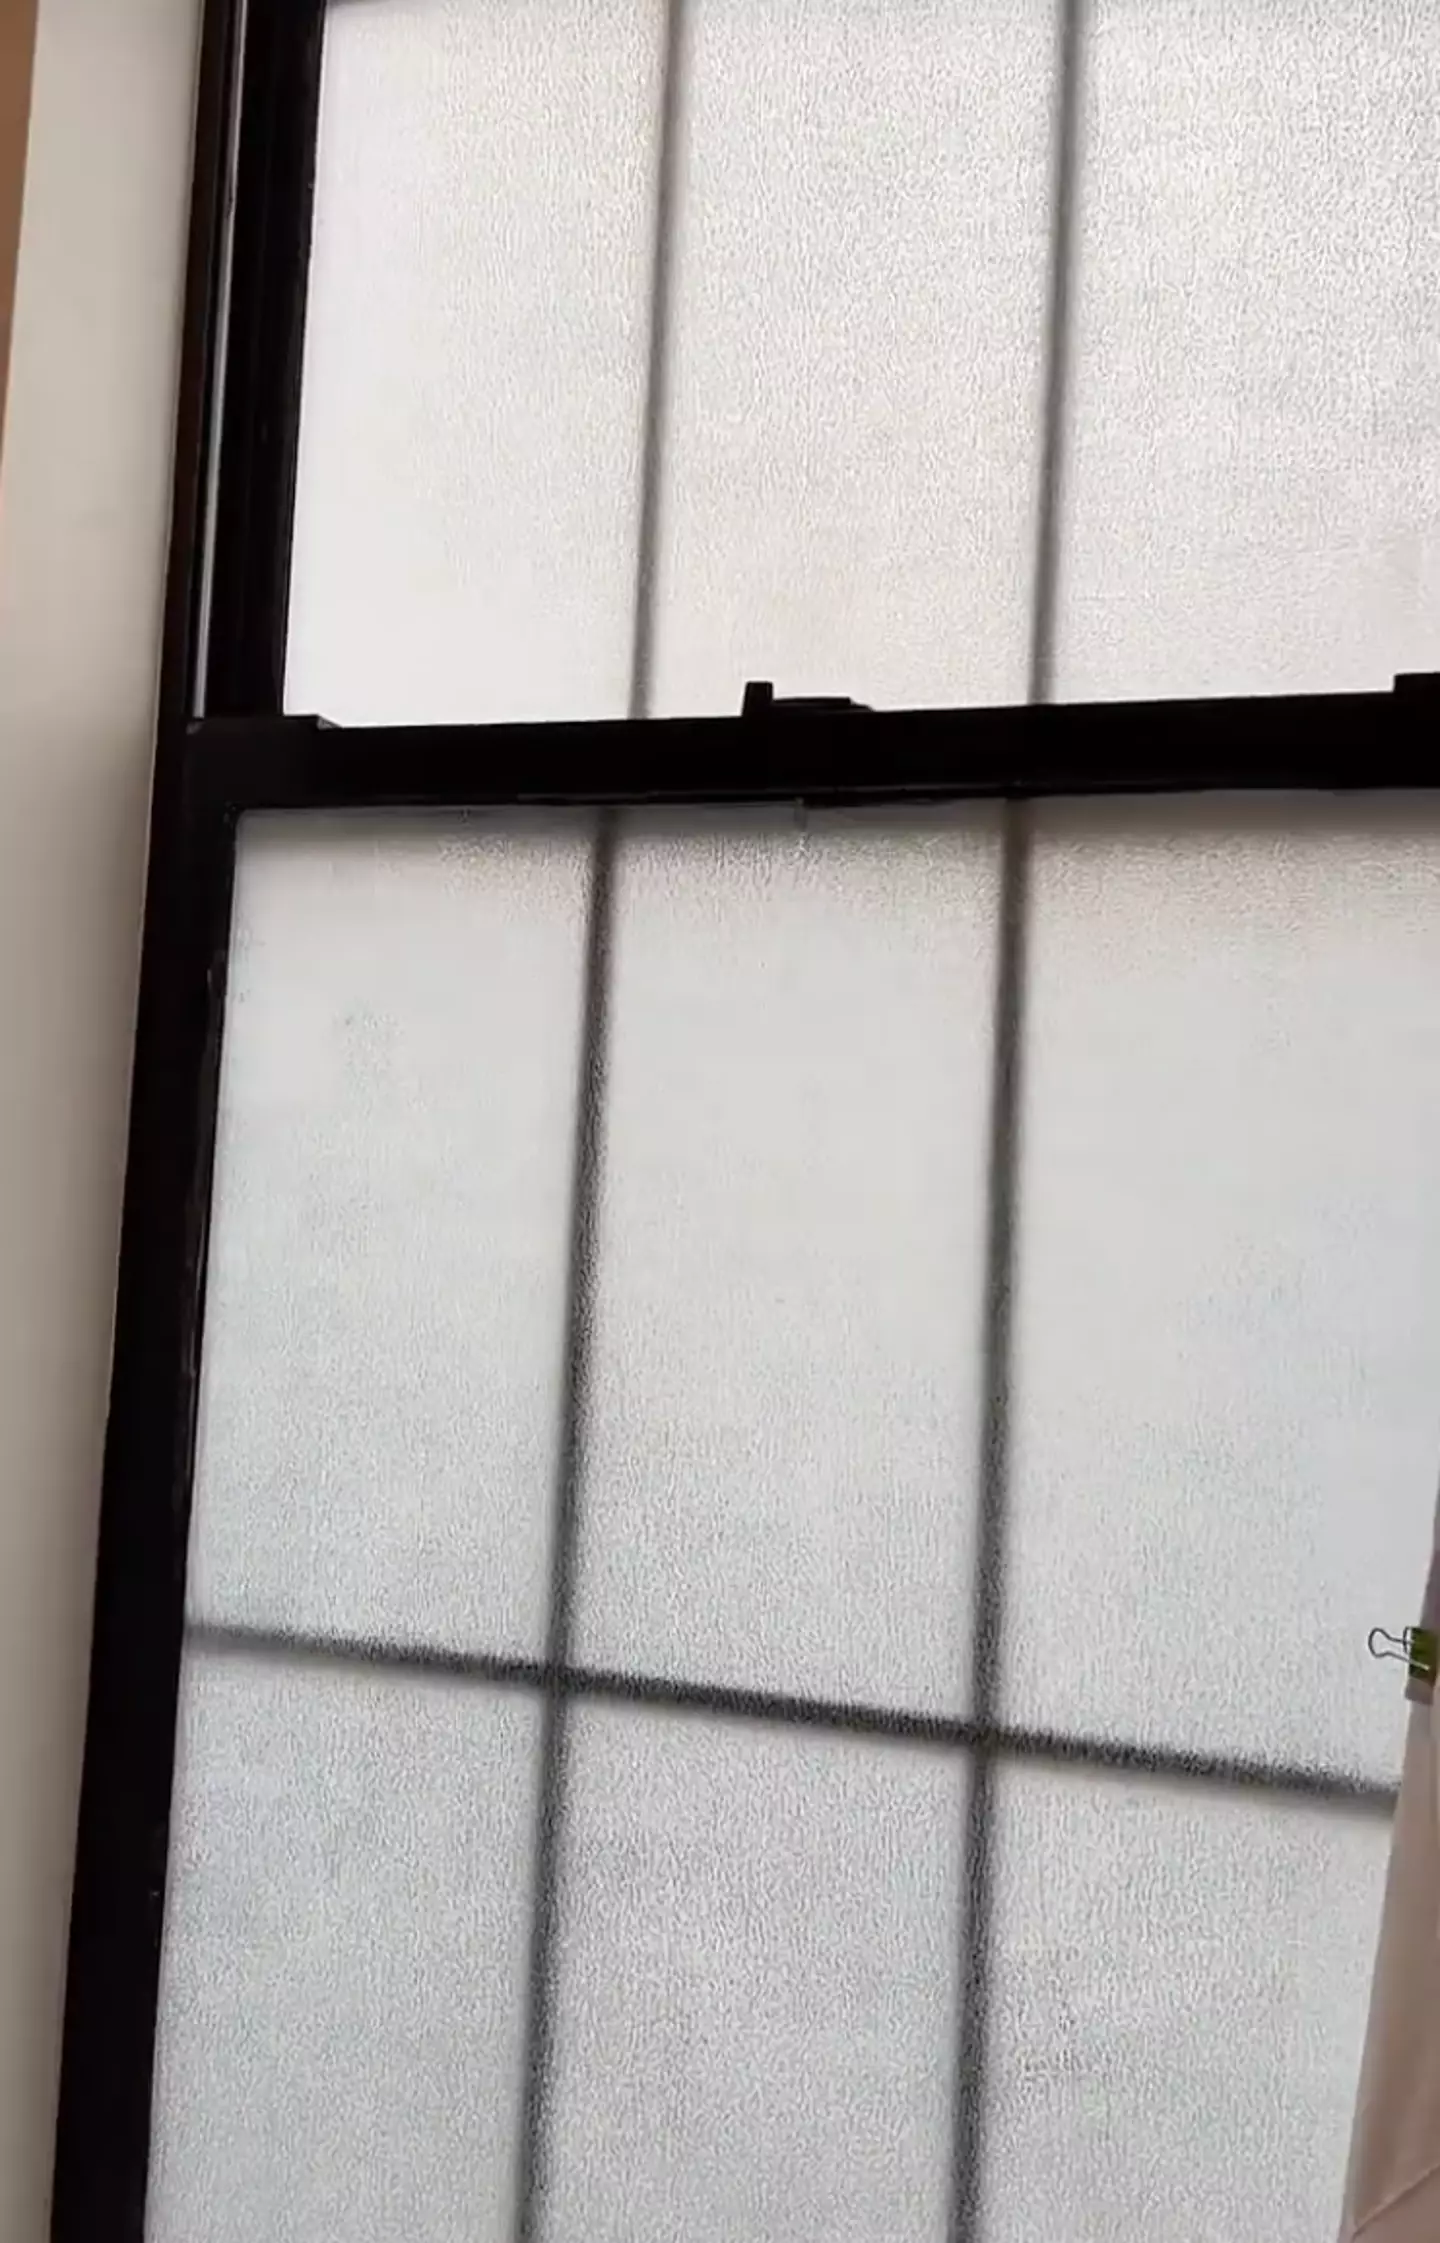 She made a makeshift window film.